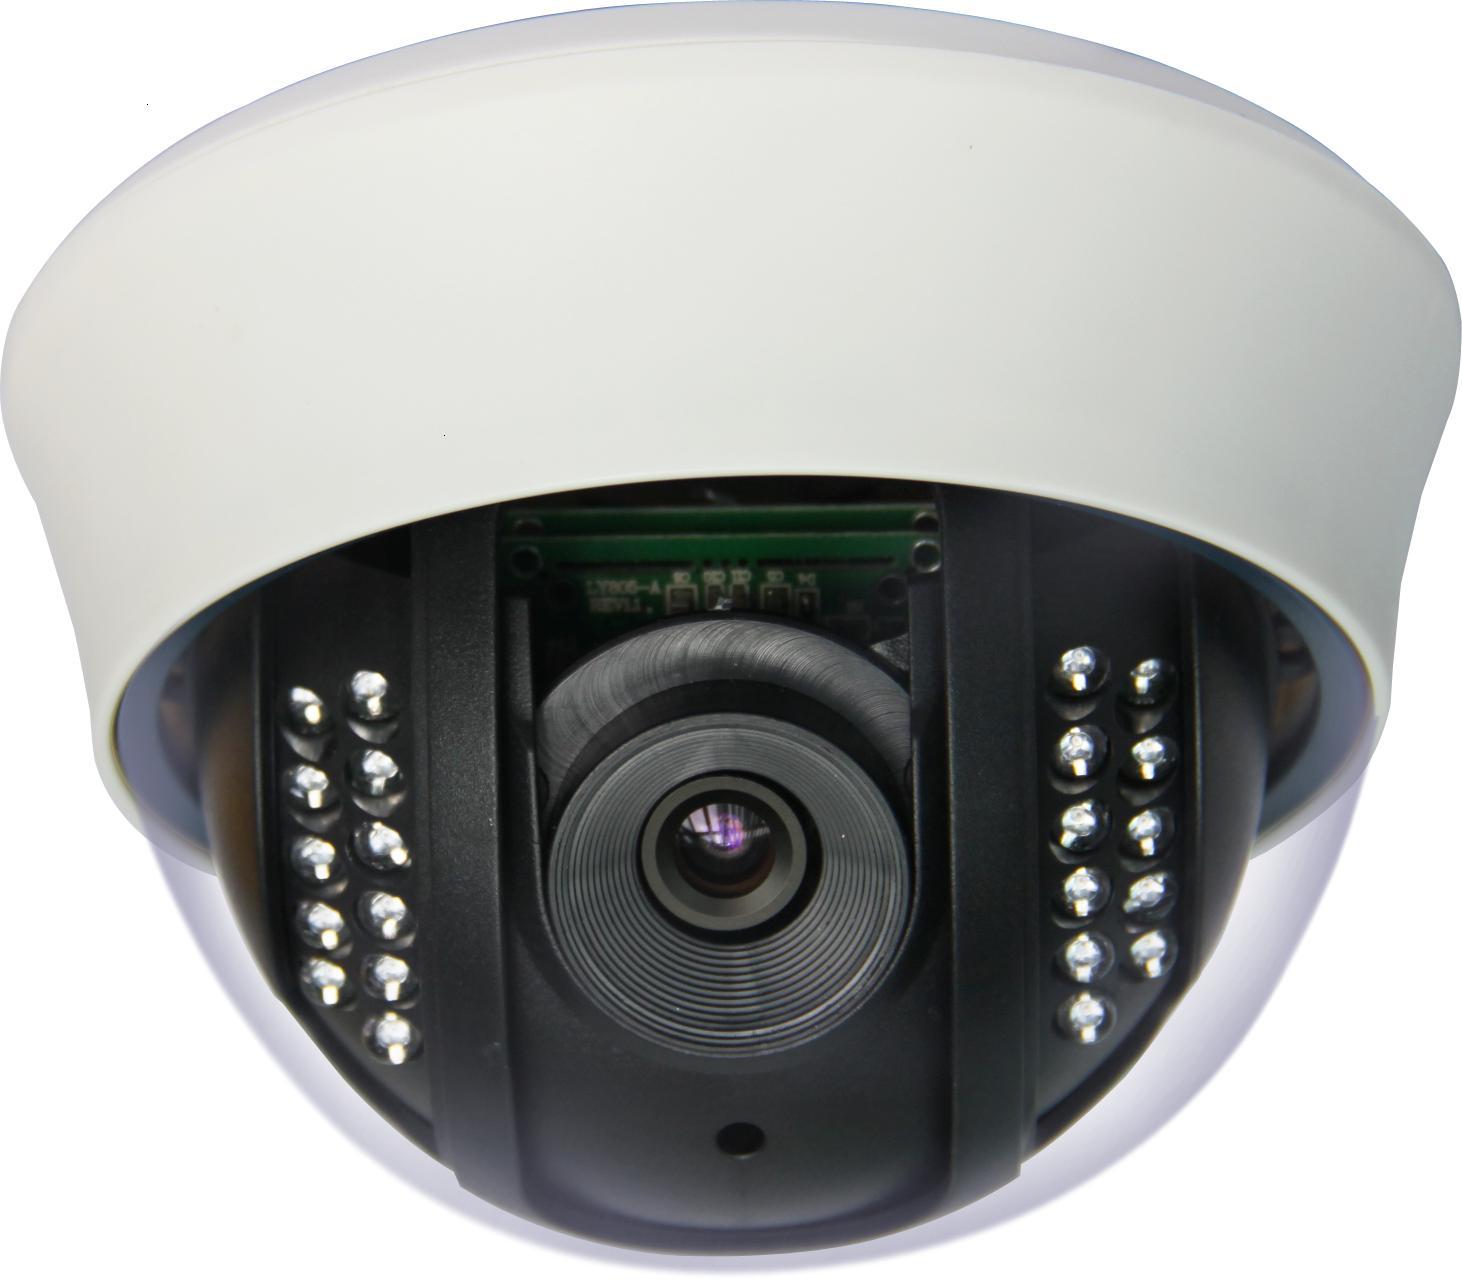 IR 2 Megapixel Semi Dome IP Web Network CCTV Camera